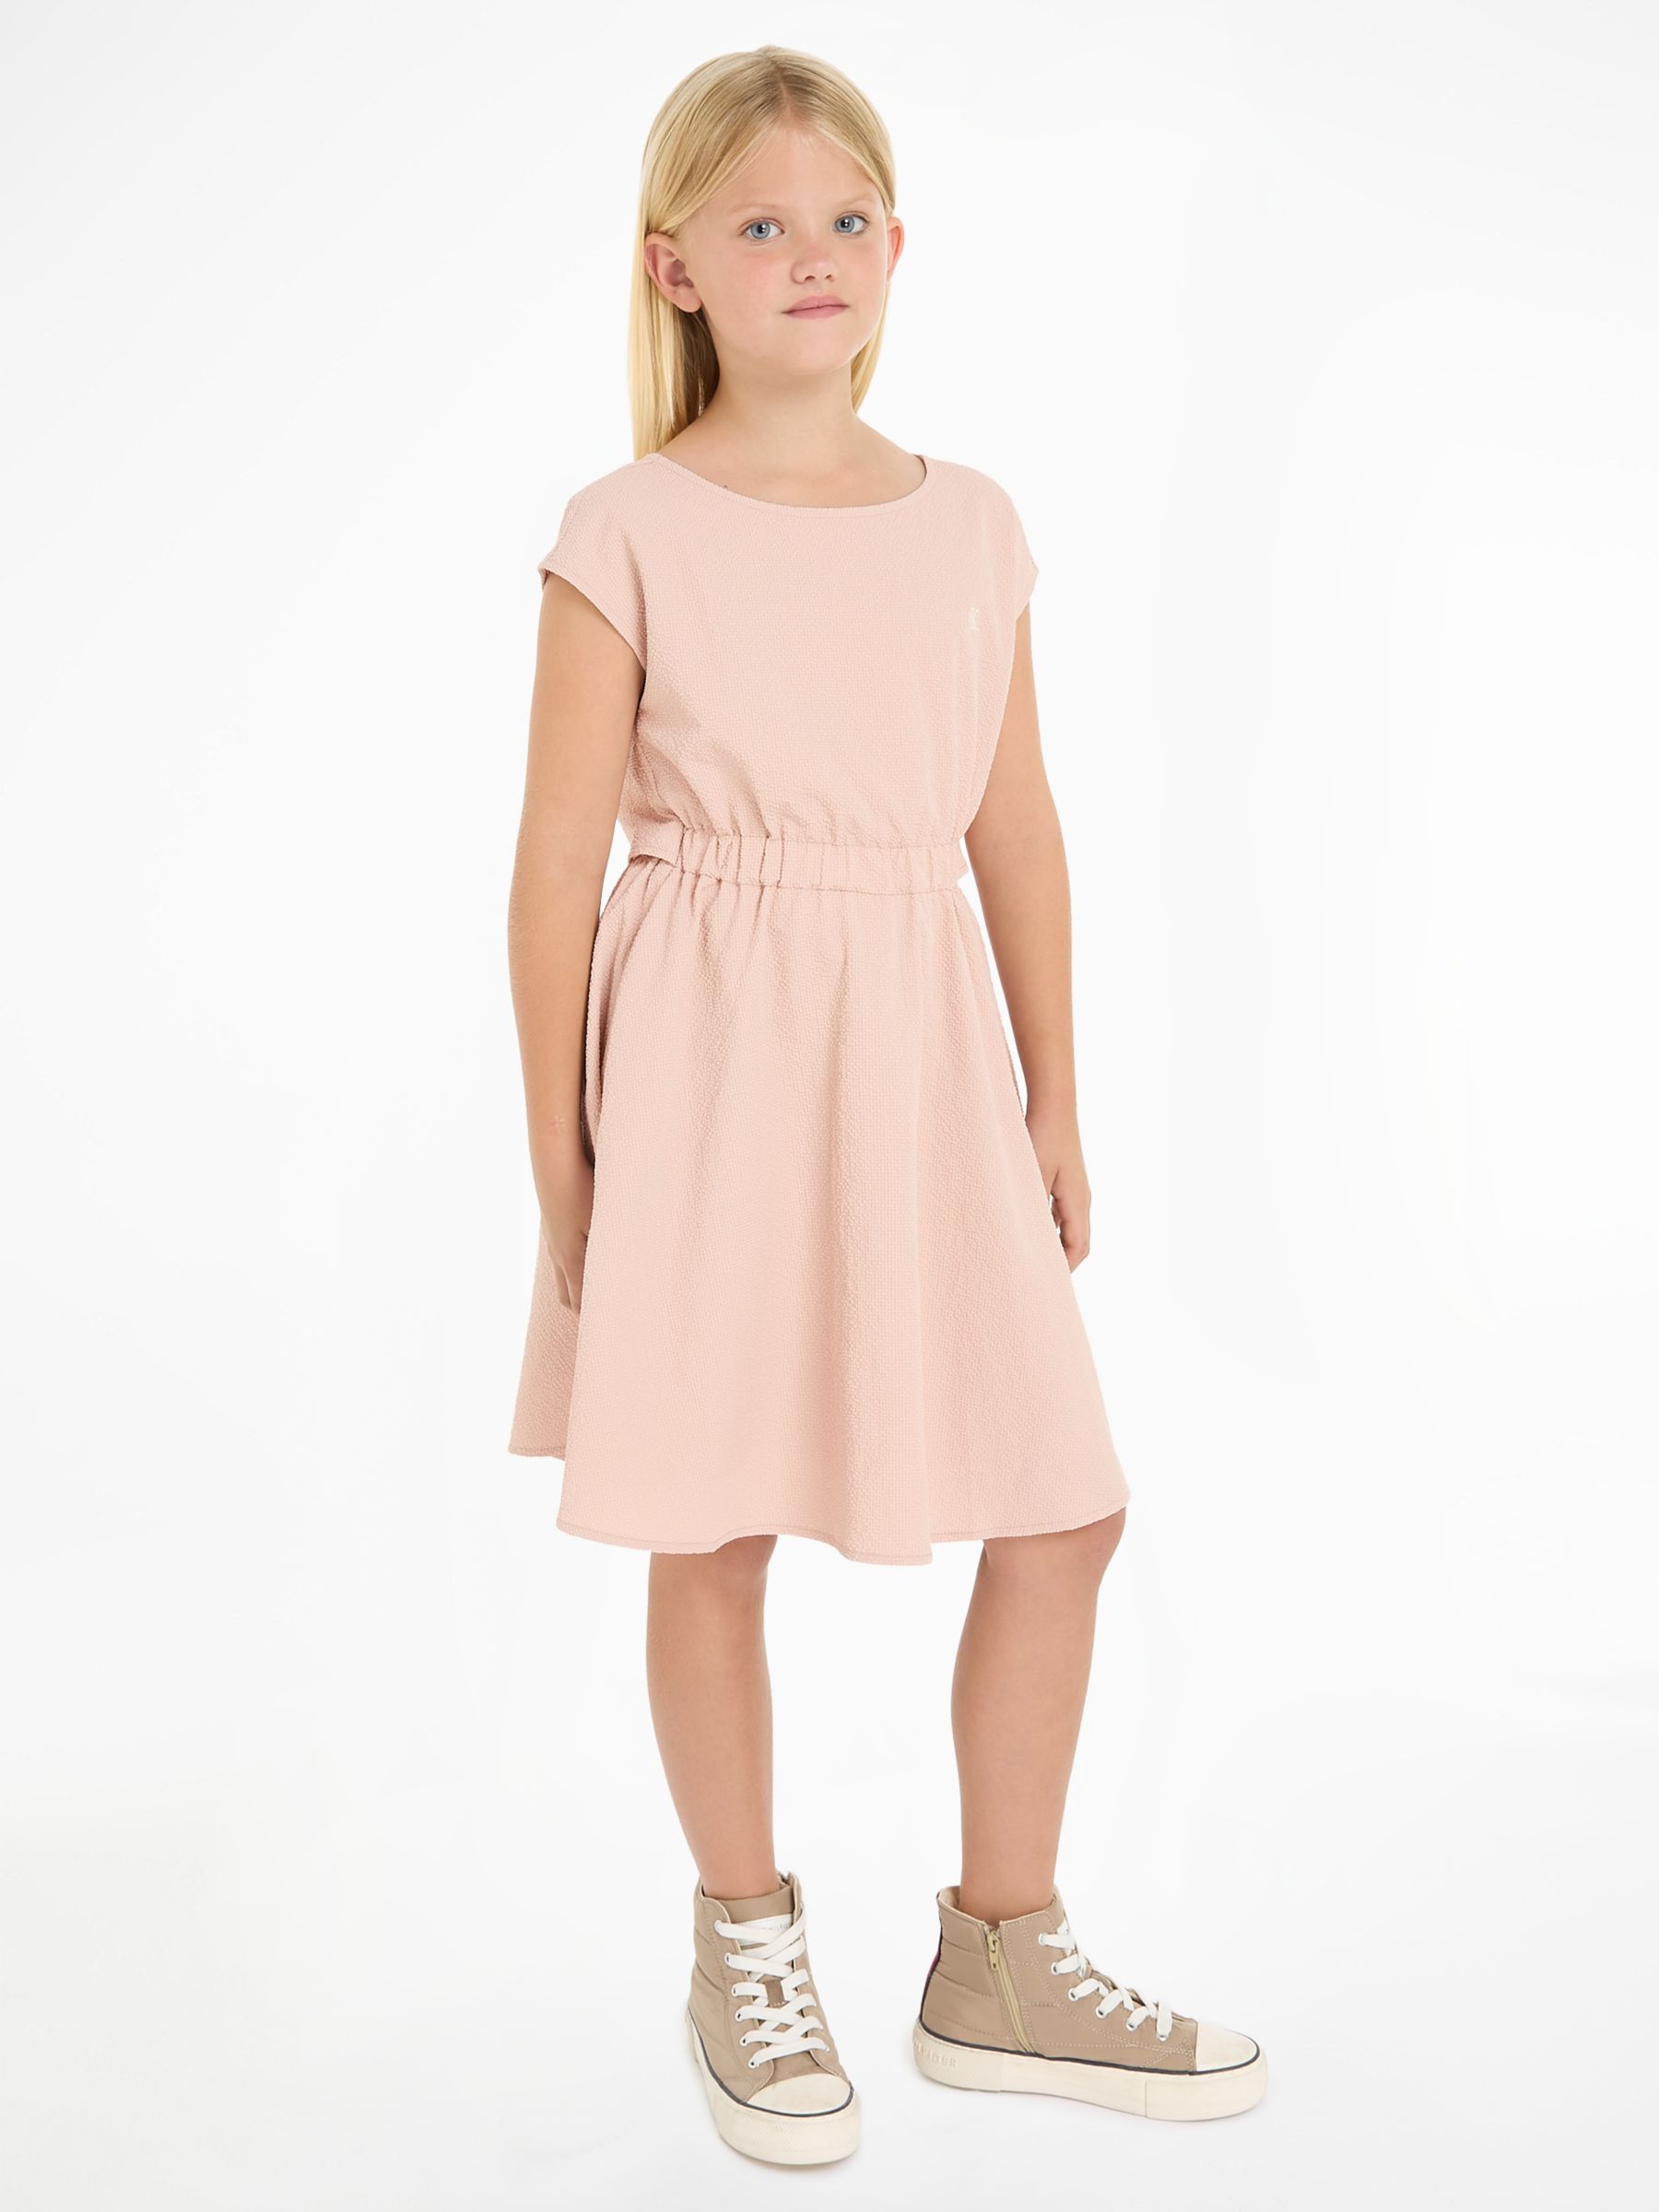 Calvin Klein Kids' Baby Seersucker Fit Flare Dress, Sepia Rose, 10 years